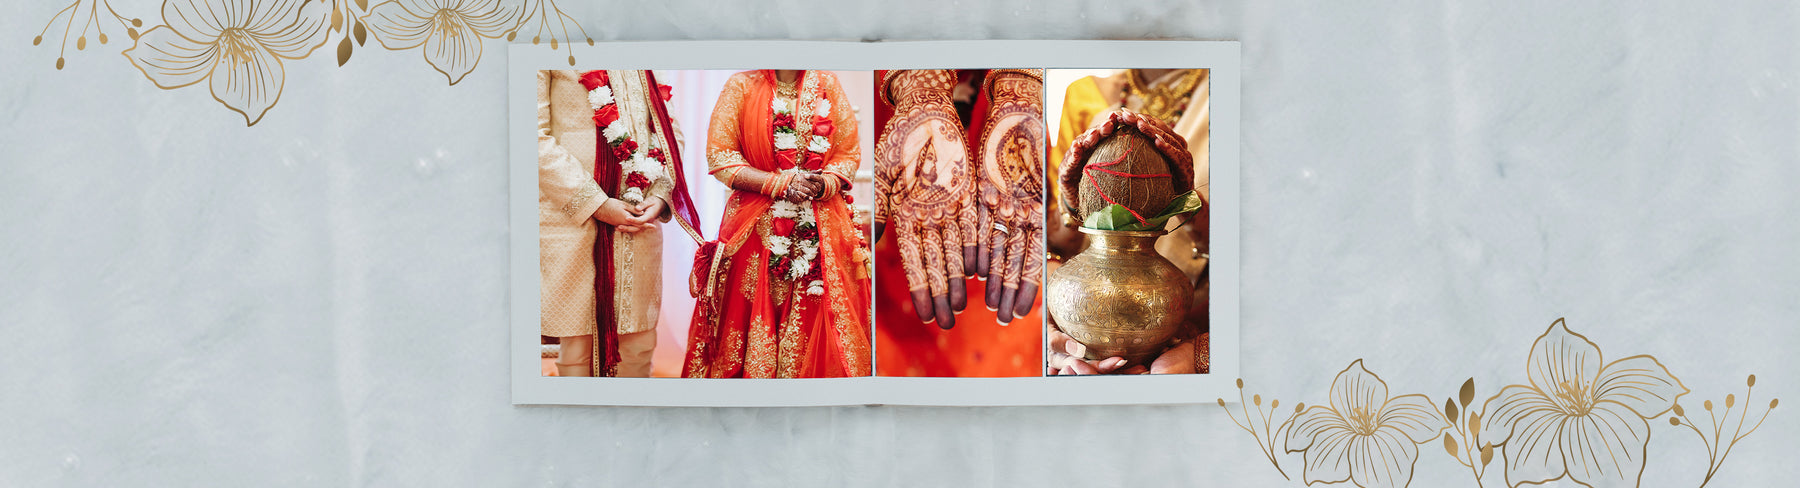 Can Indian weddings be vegan? | One Good India